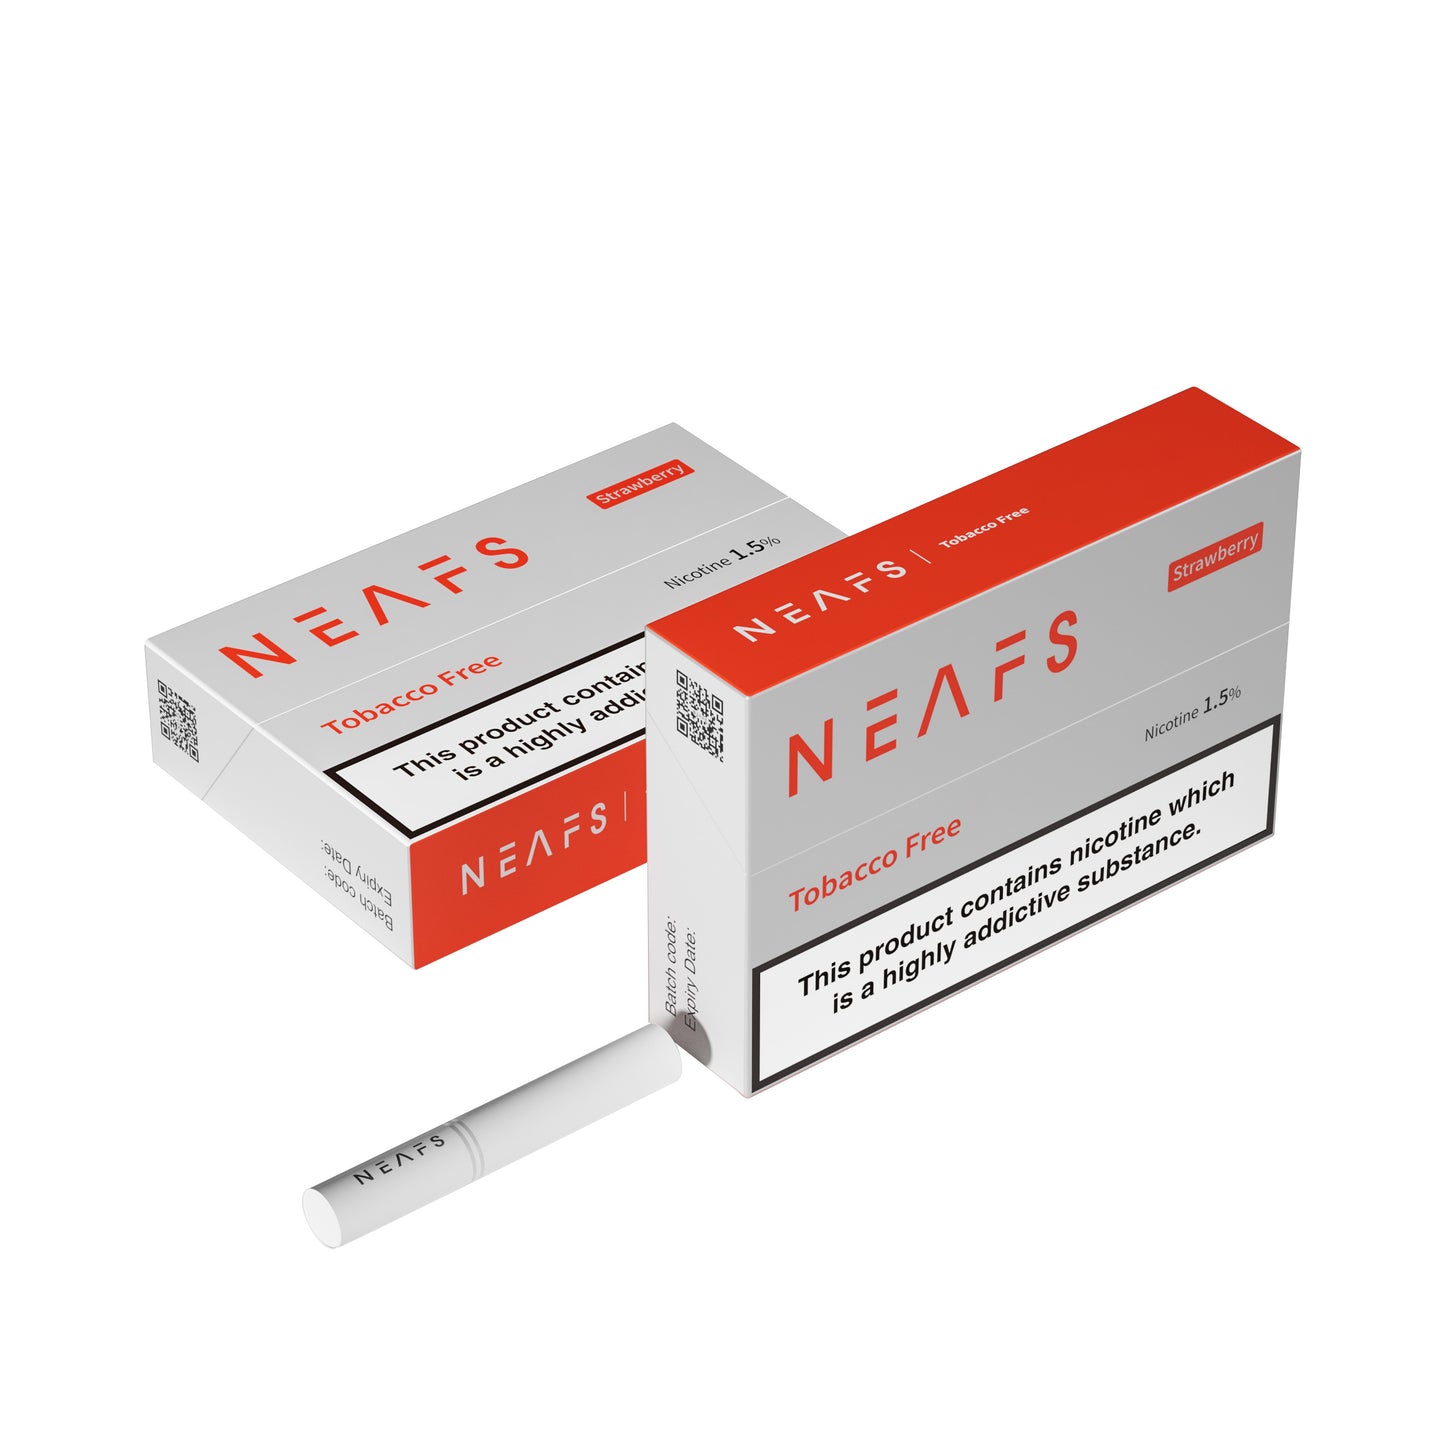 NEAFS Strawberry Tobacco Free Heated Sticks